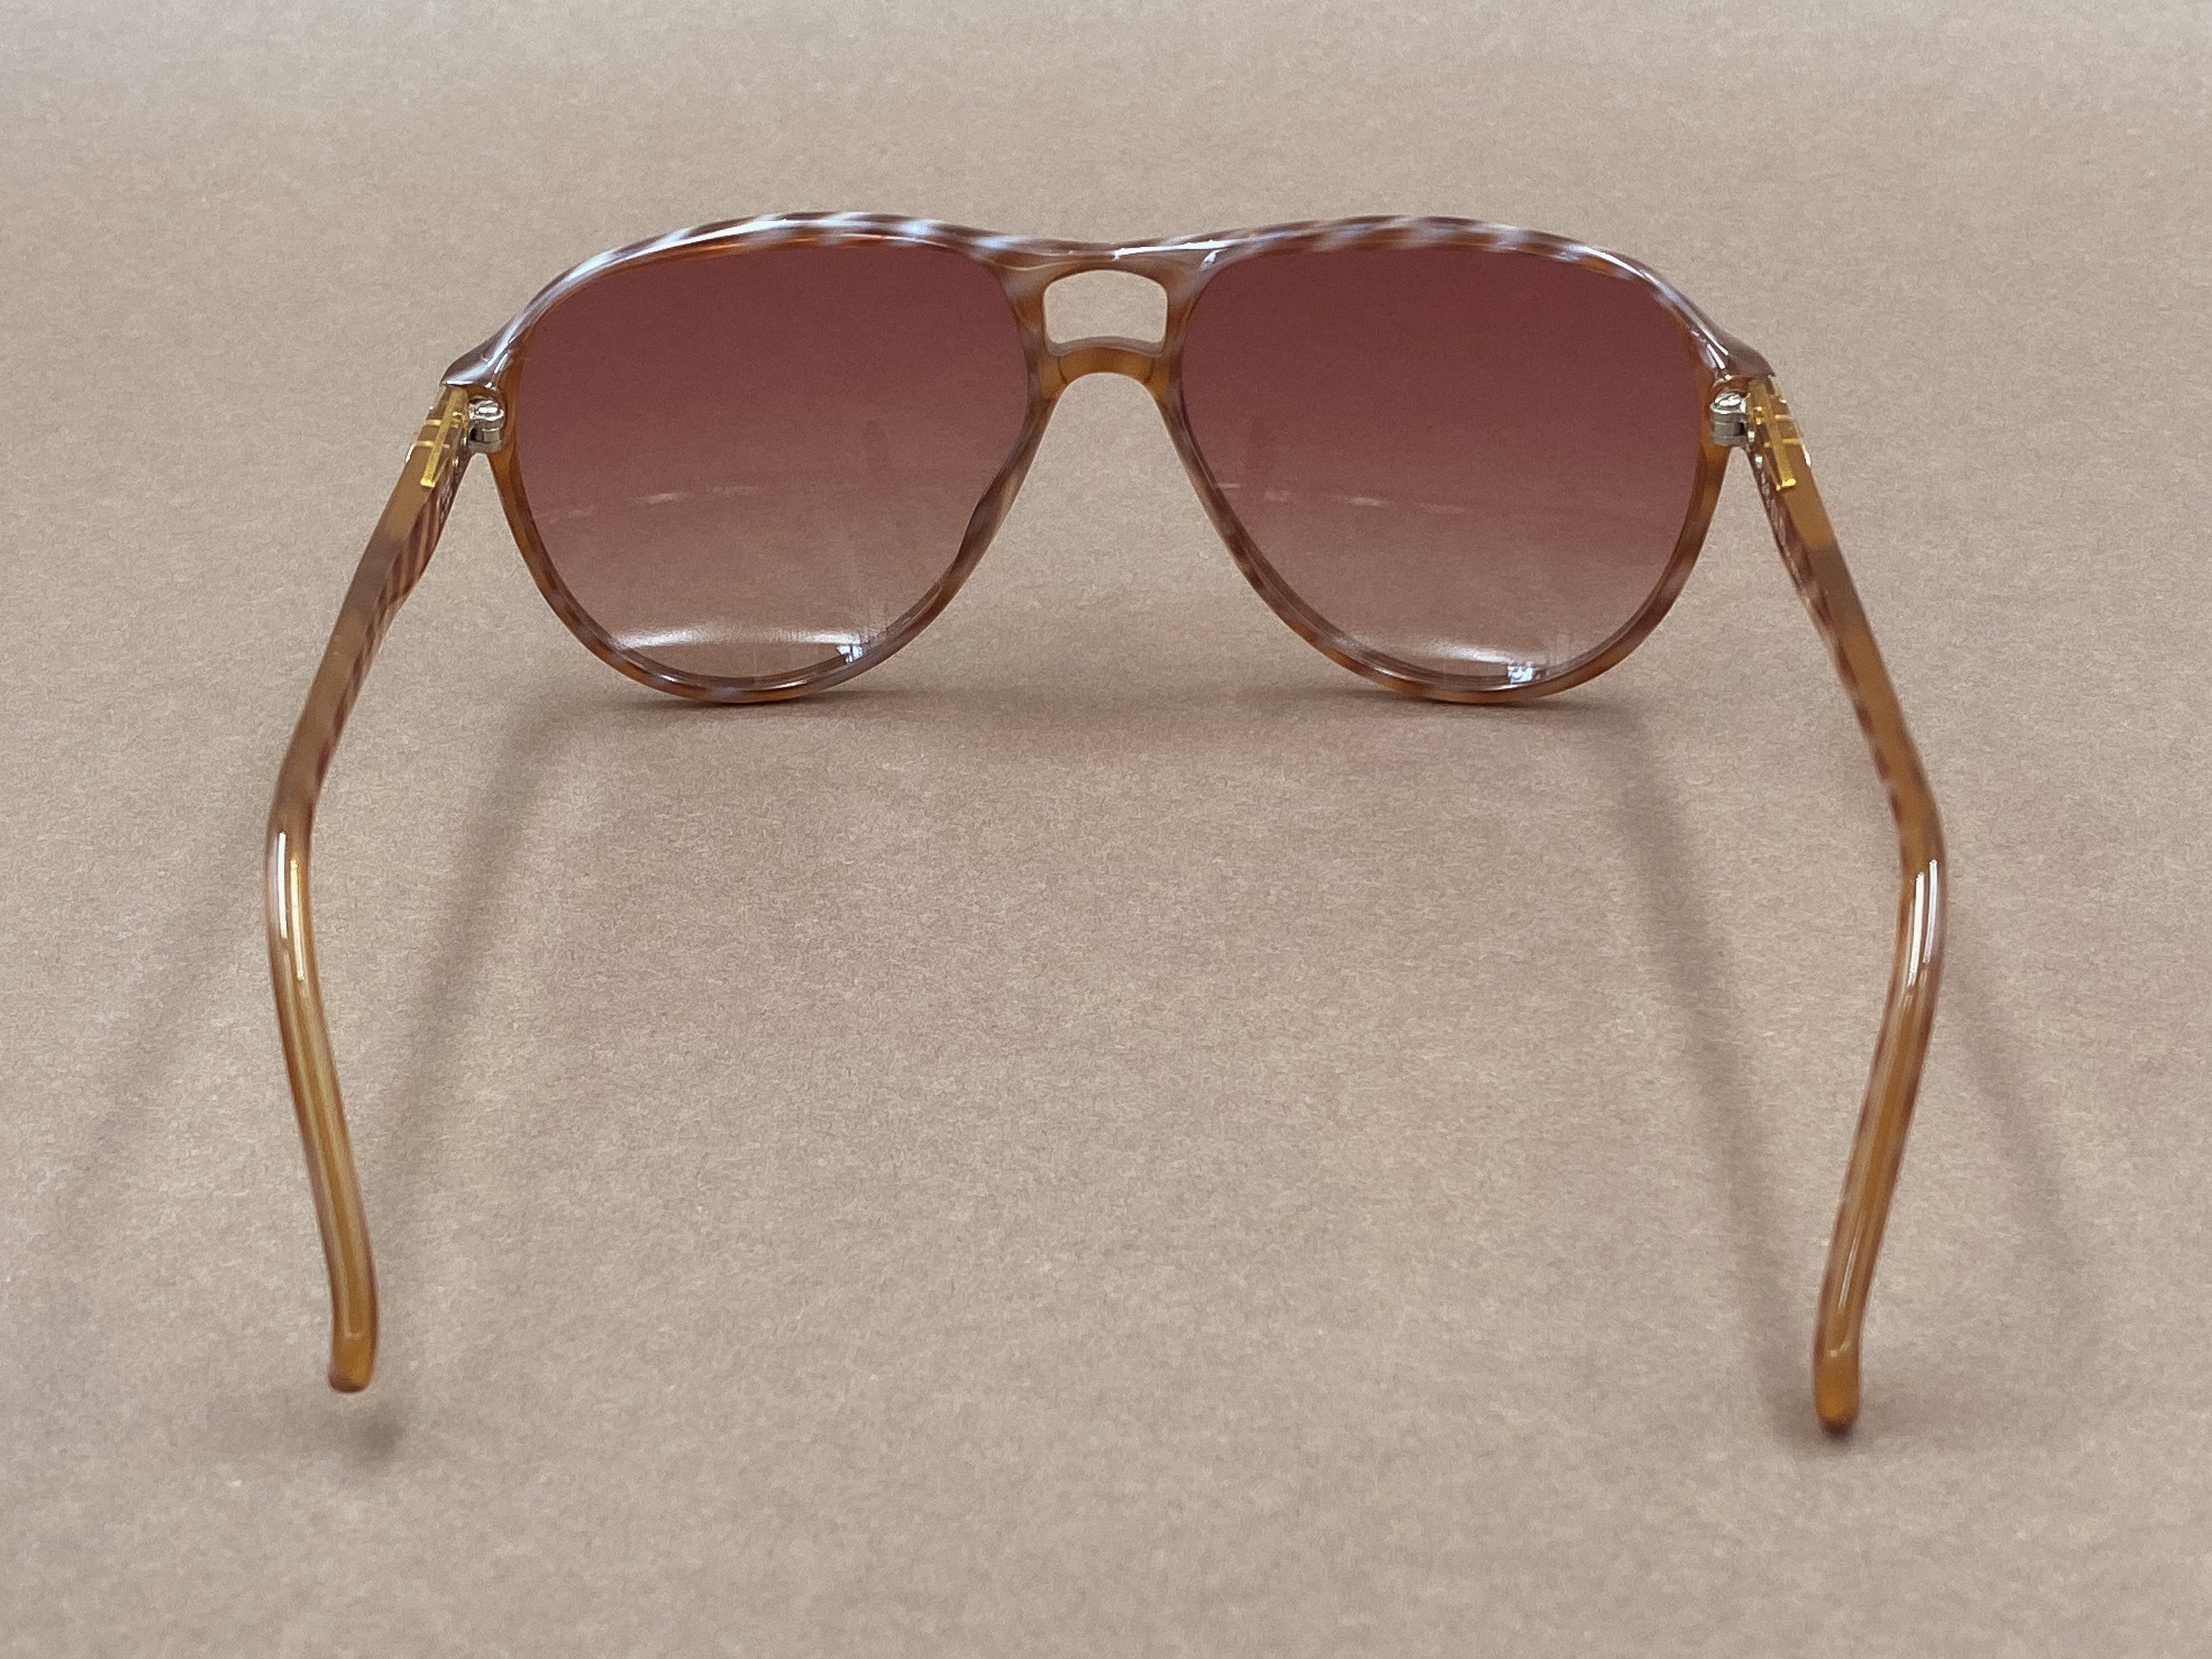 Christian Dior 2336 monsieur sunglasses